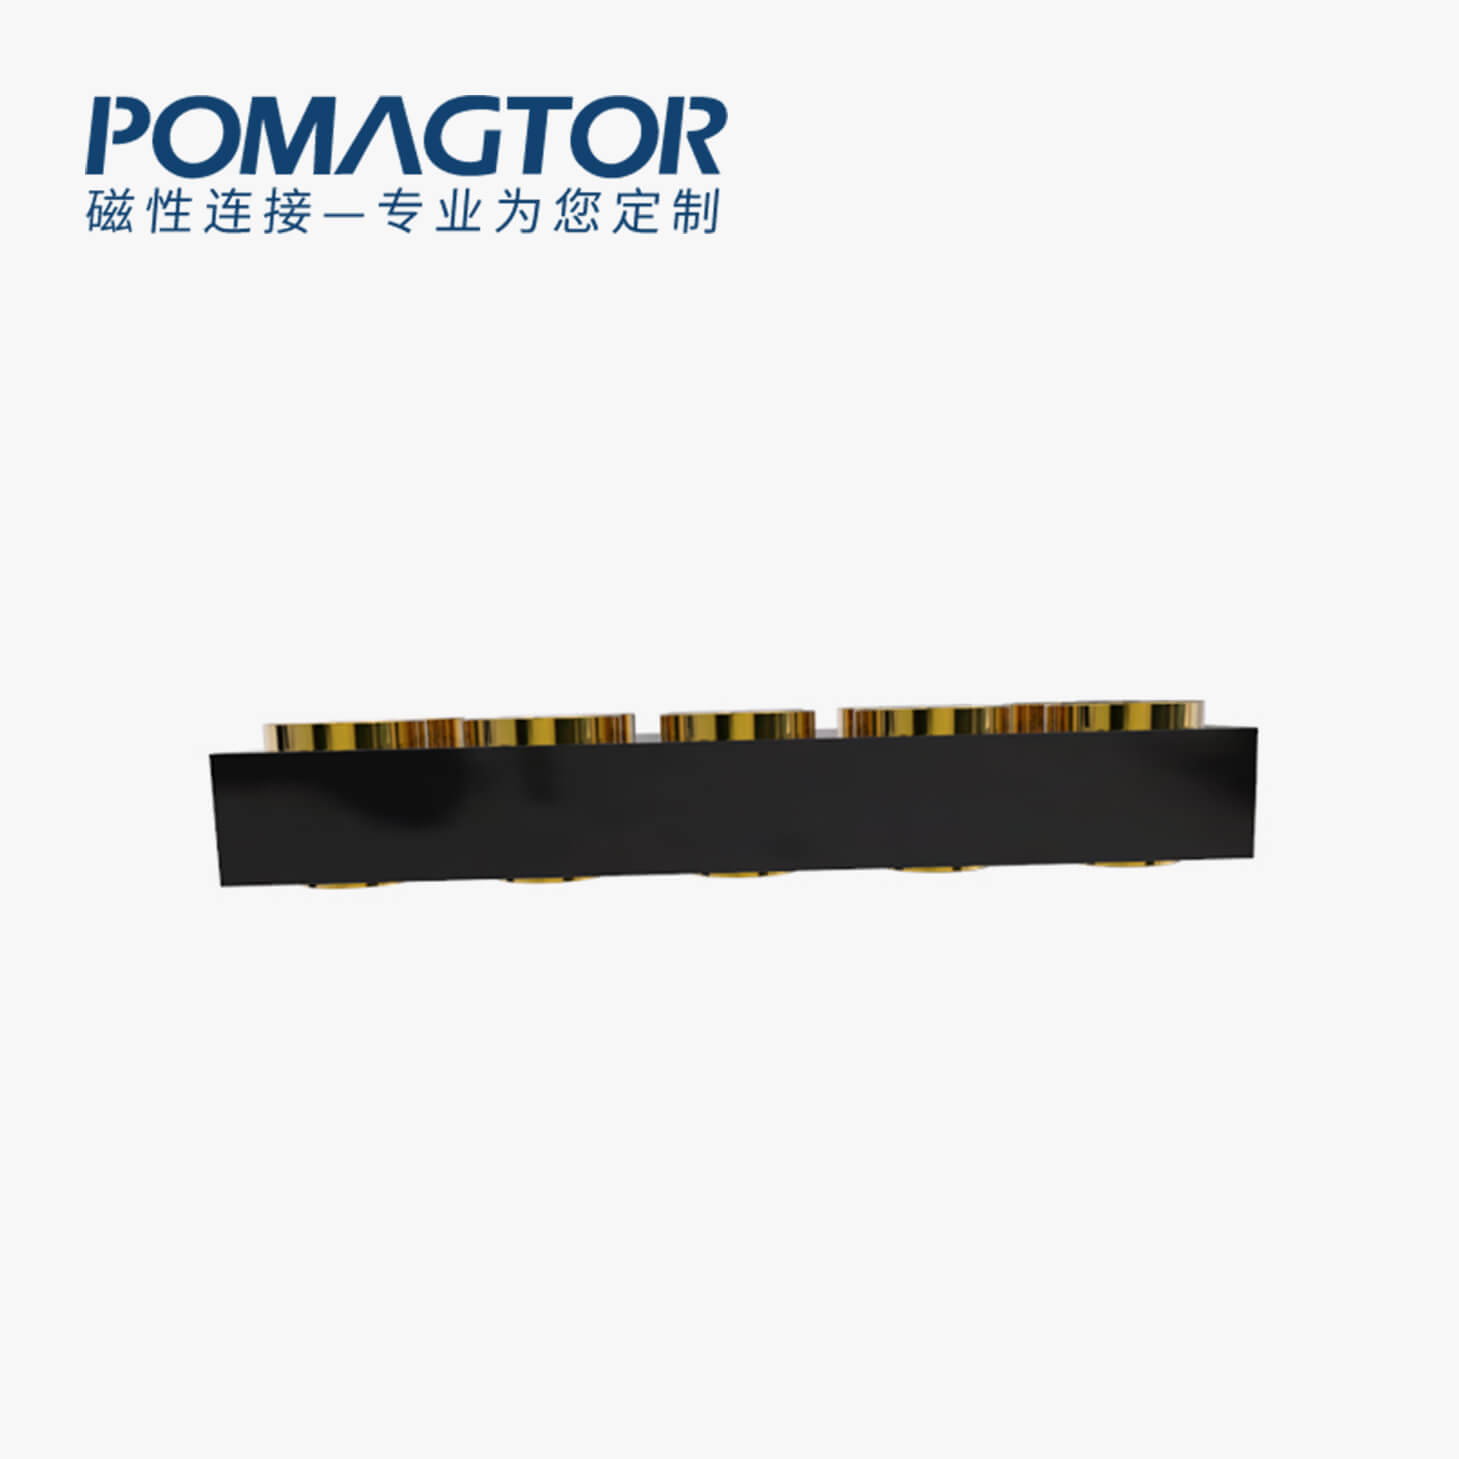 POGO PIN连接器 SMT式：10PIN，电镀黄铜Au5u，电压12V，电流5A，工作温度-30°~85°